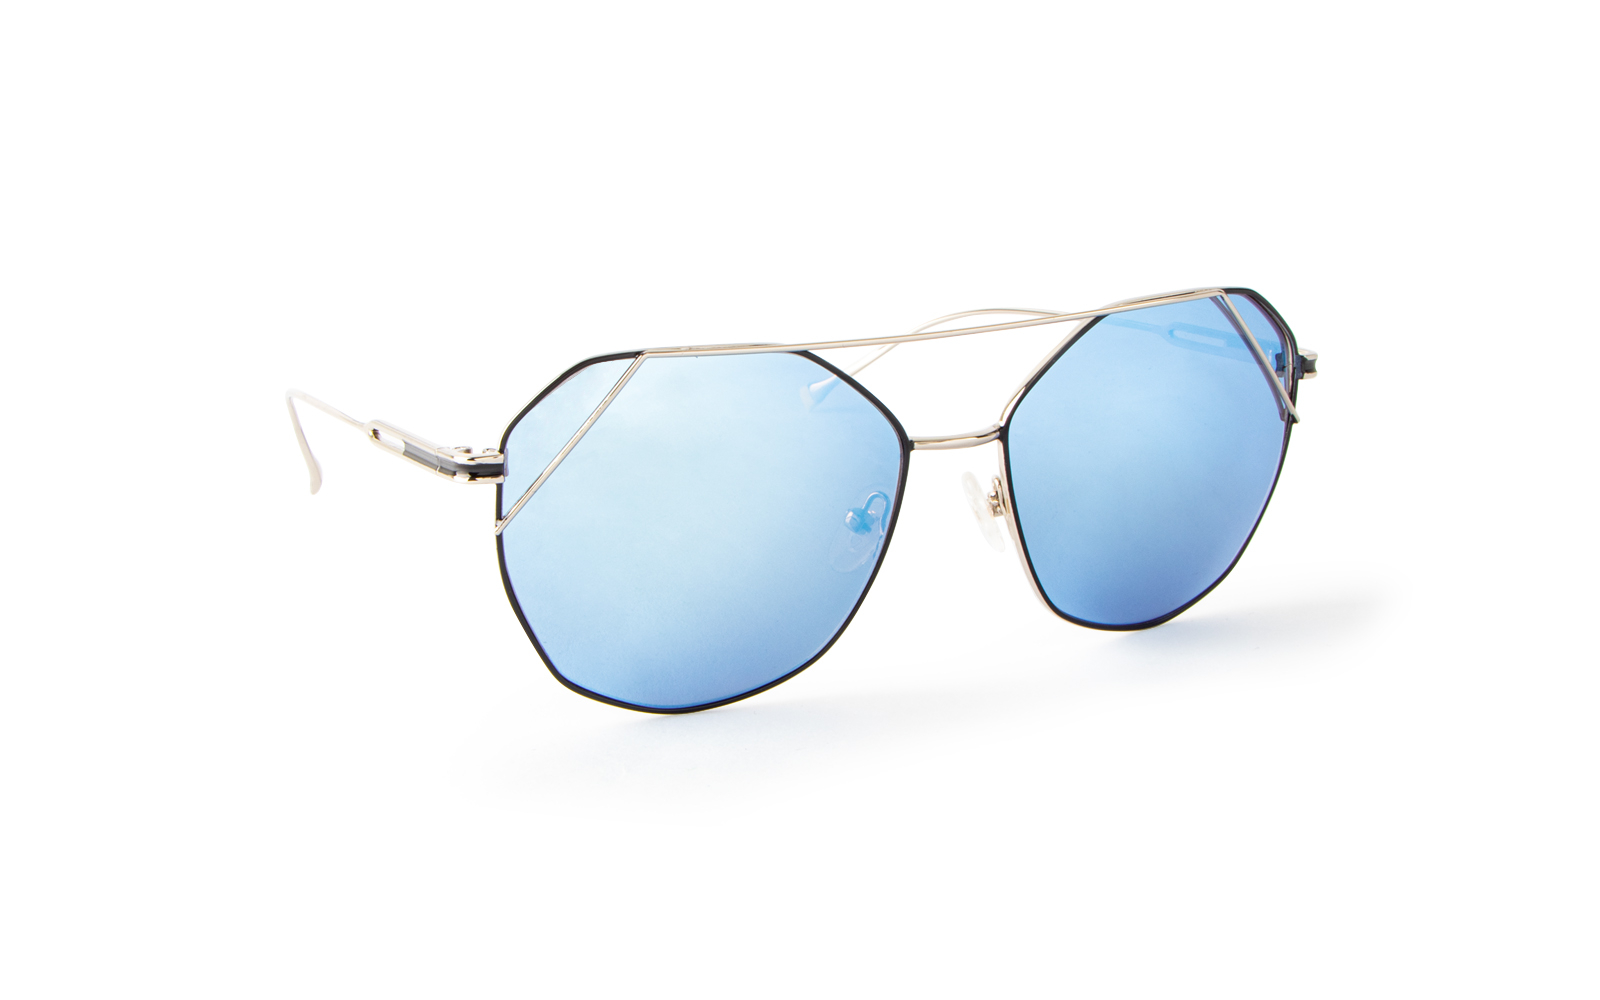 Invicta Men's Objet D Art Octagonal Sunglasses, Blue (27580-OBJ-03)